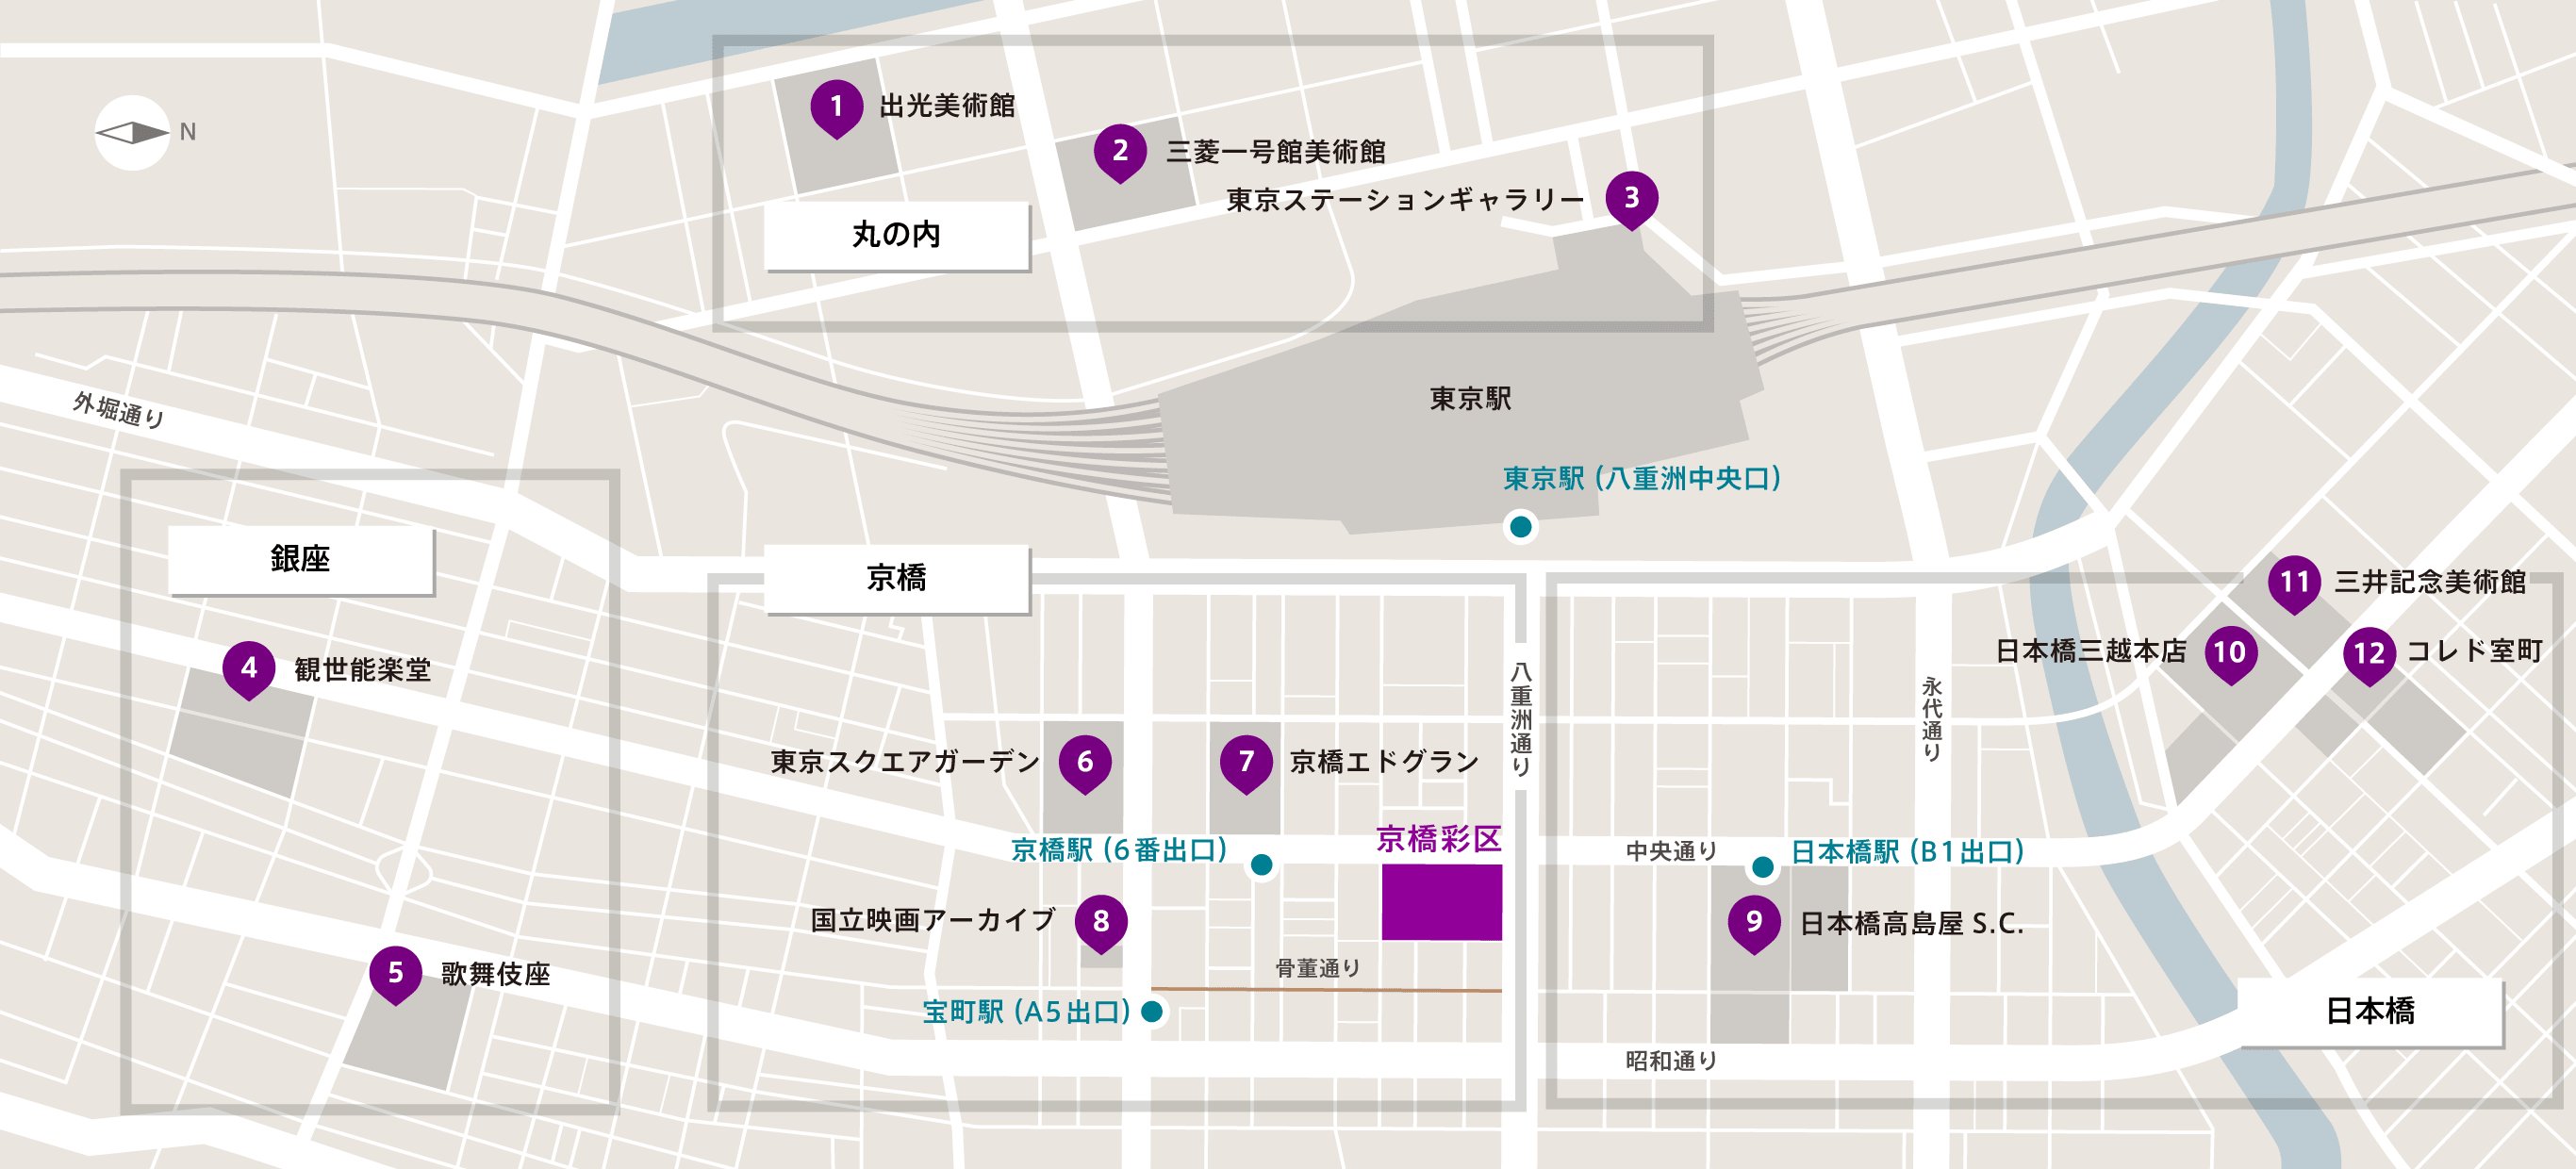 東京駅周辺地域の特徴